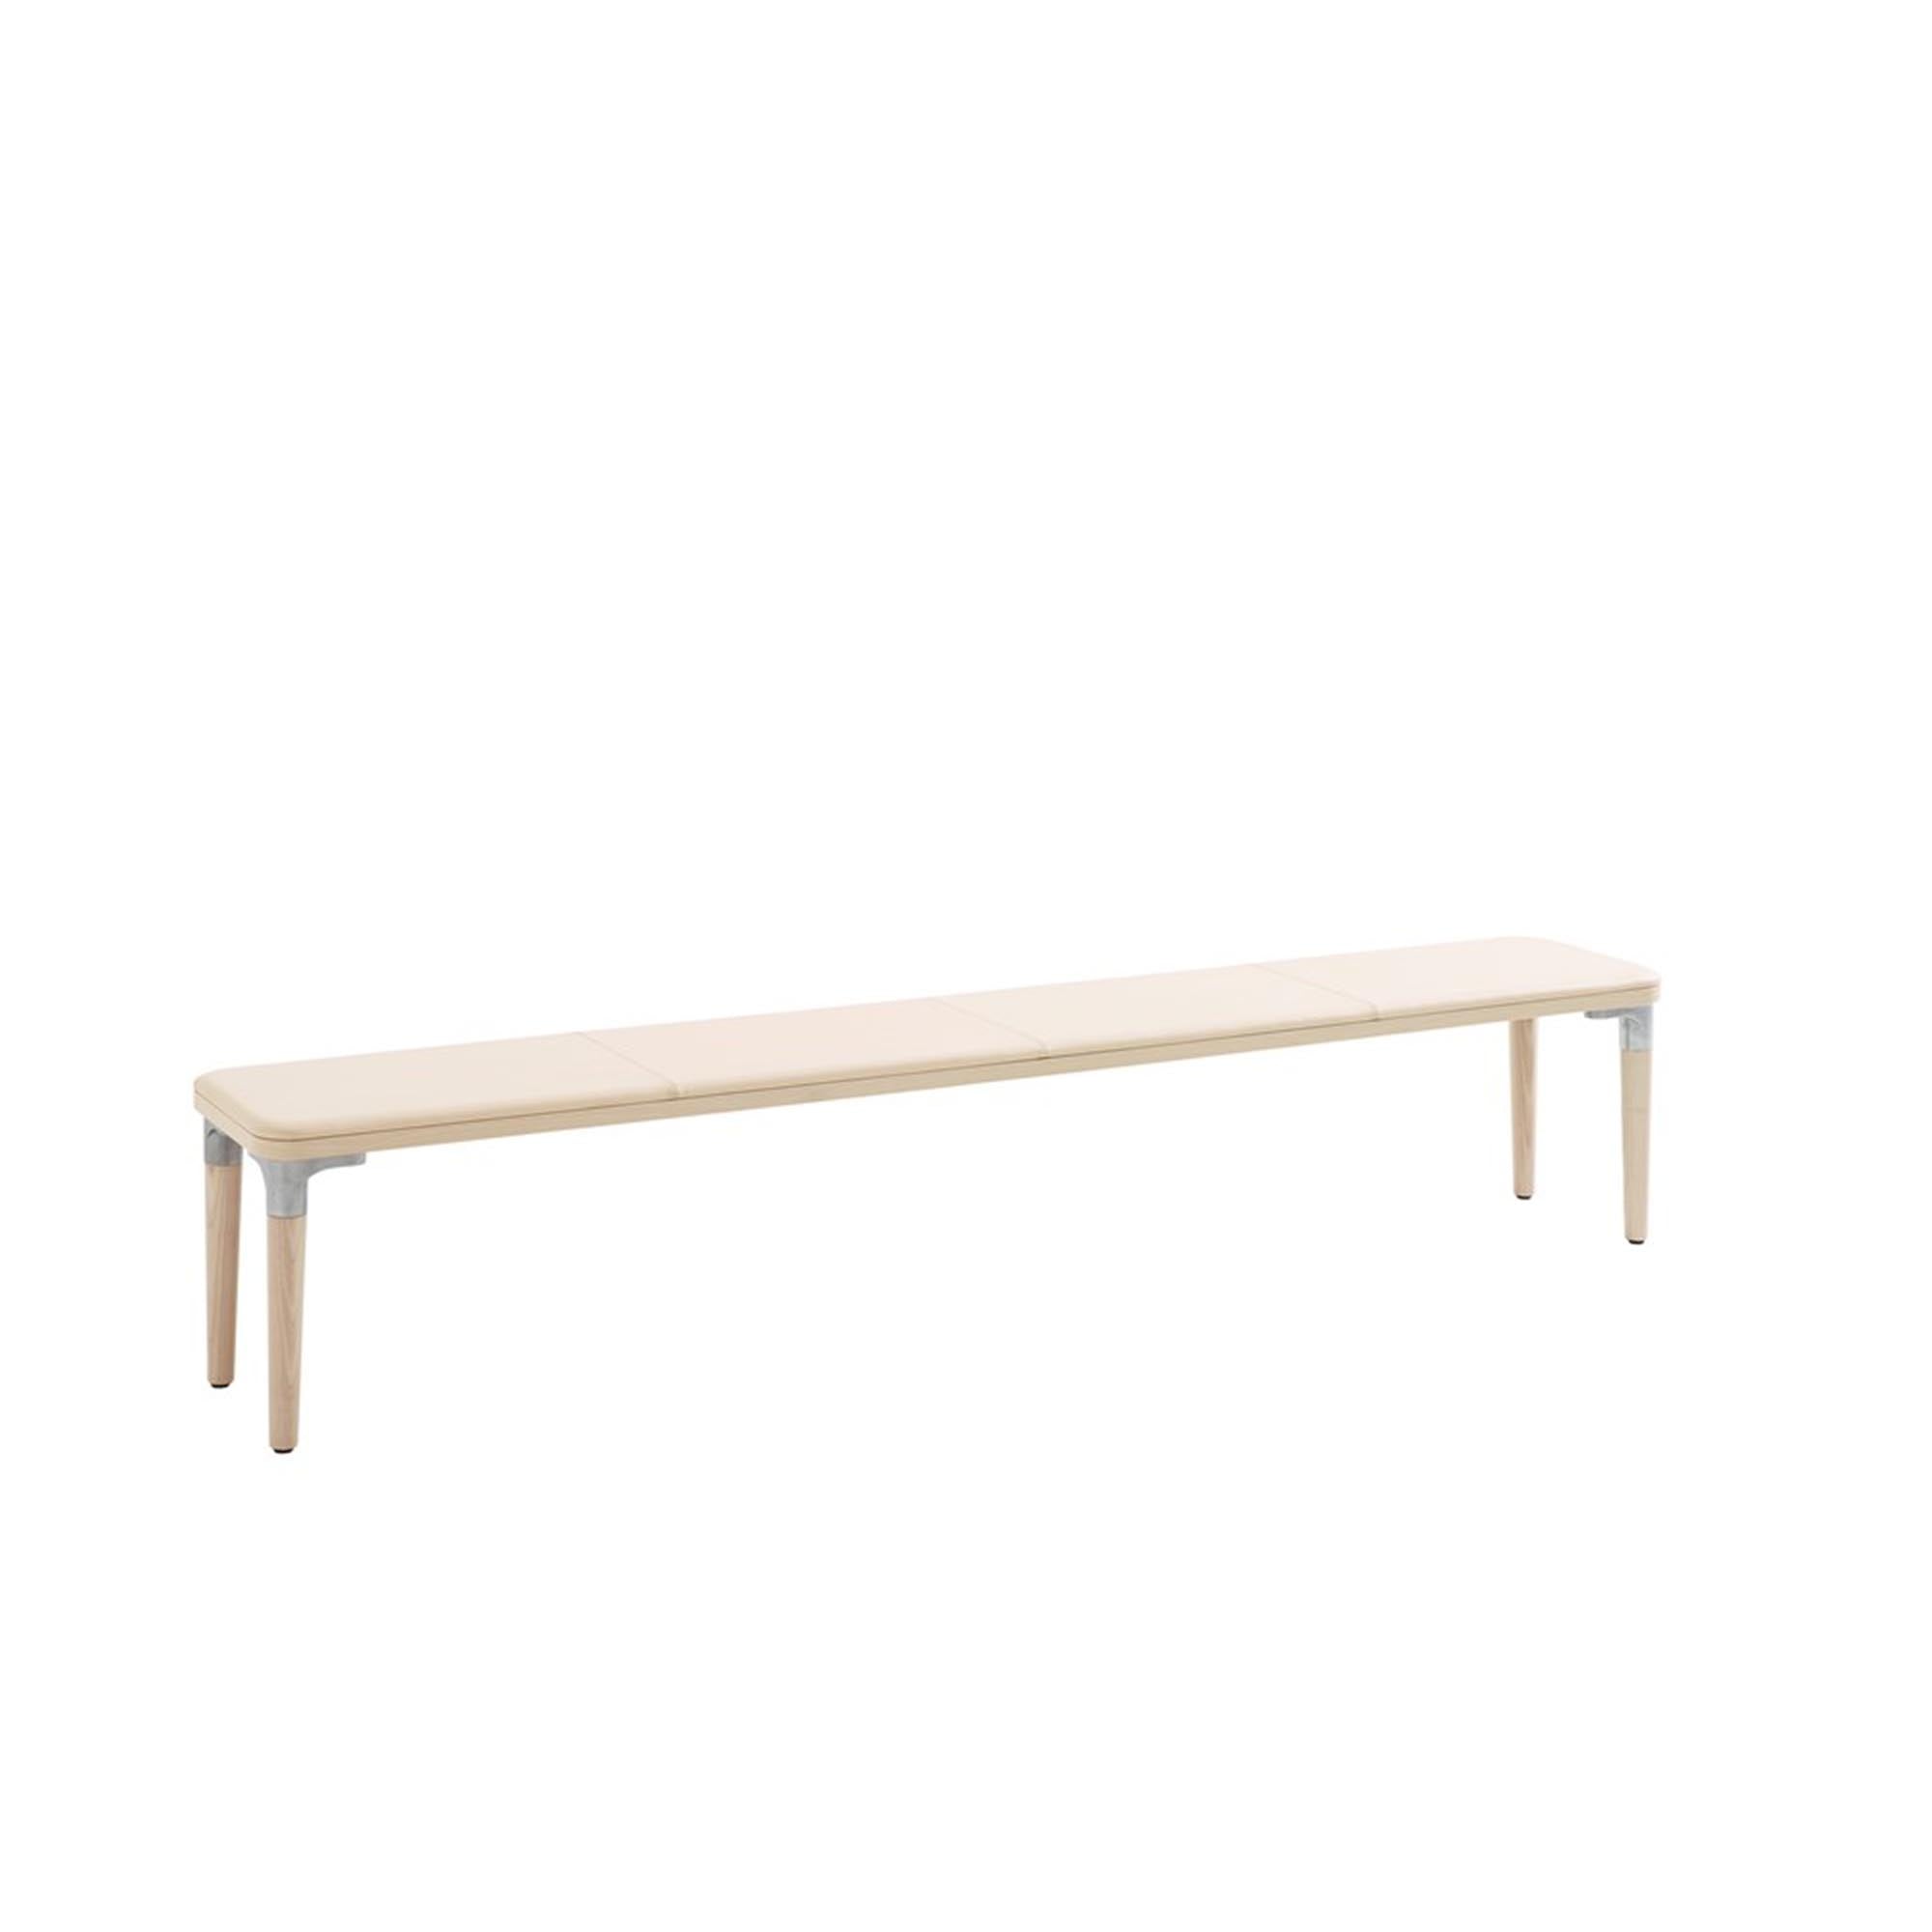 TAILOR Bench natural frame, beige upholstery, 240 cm